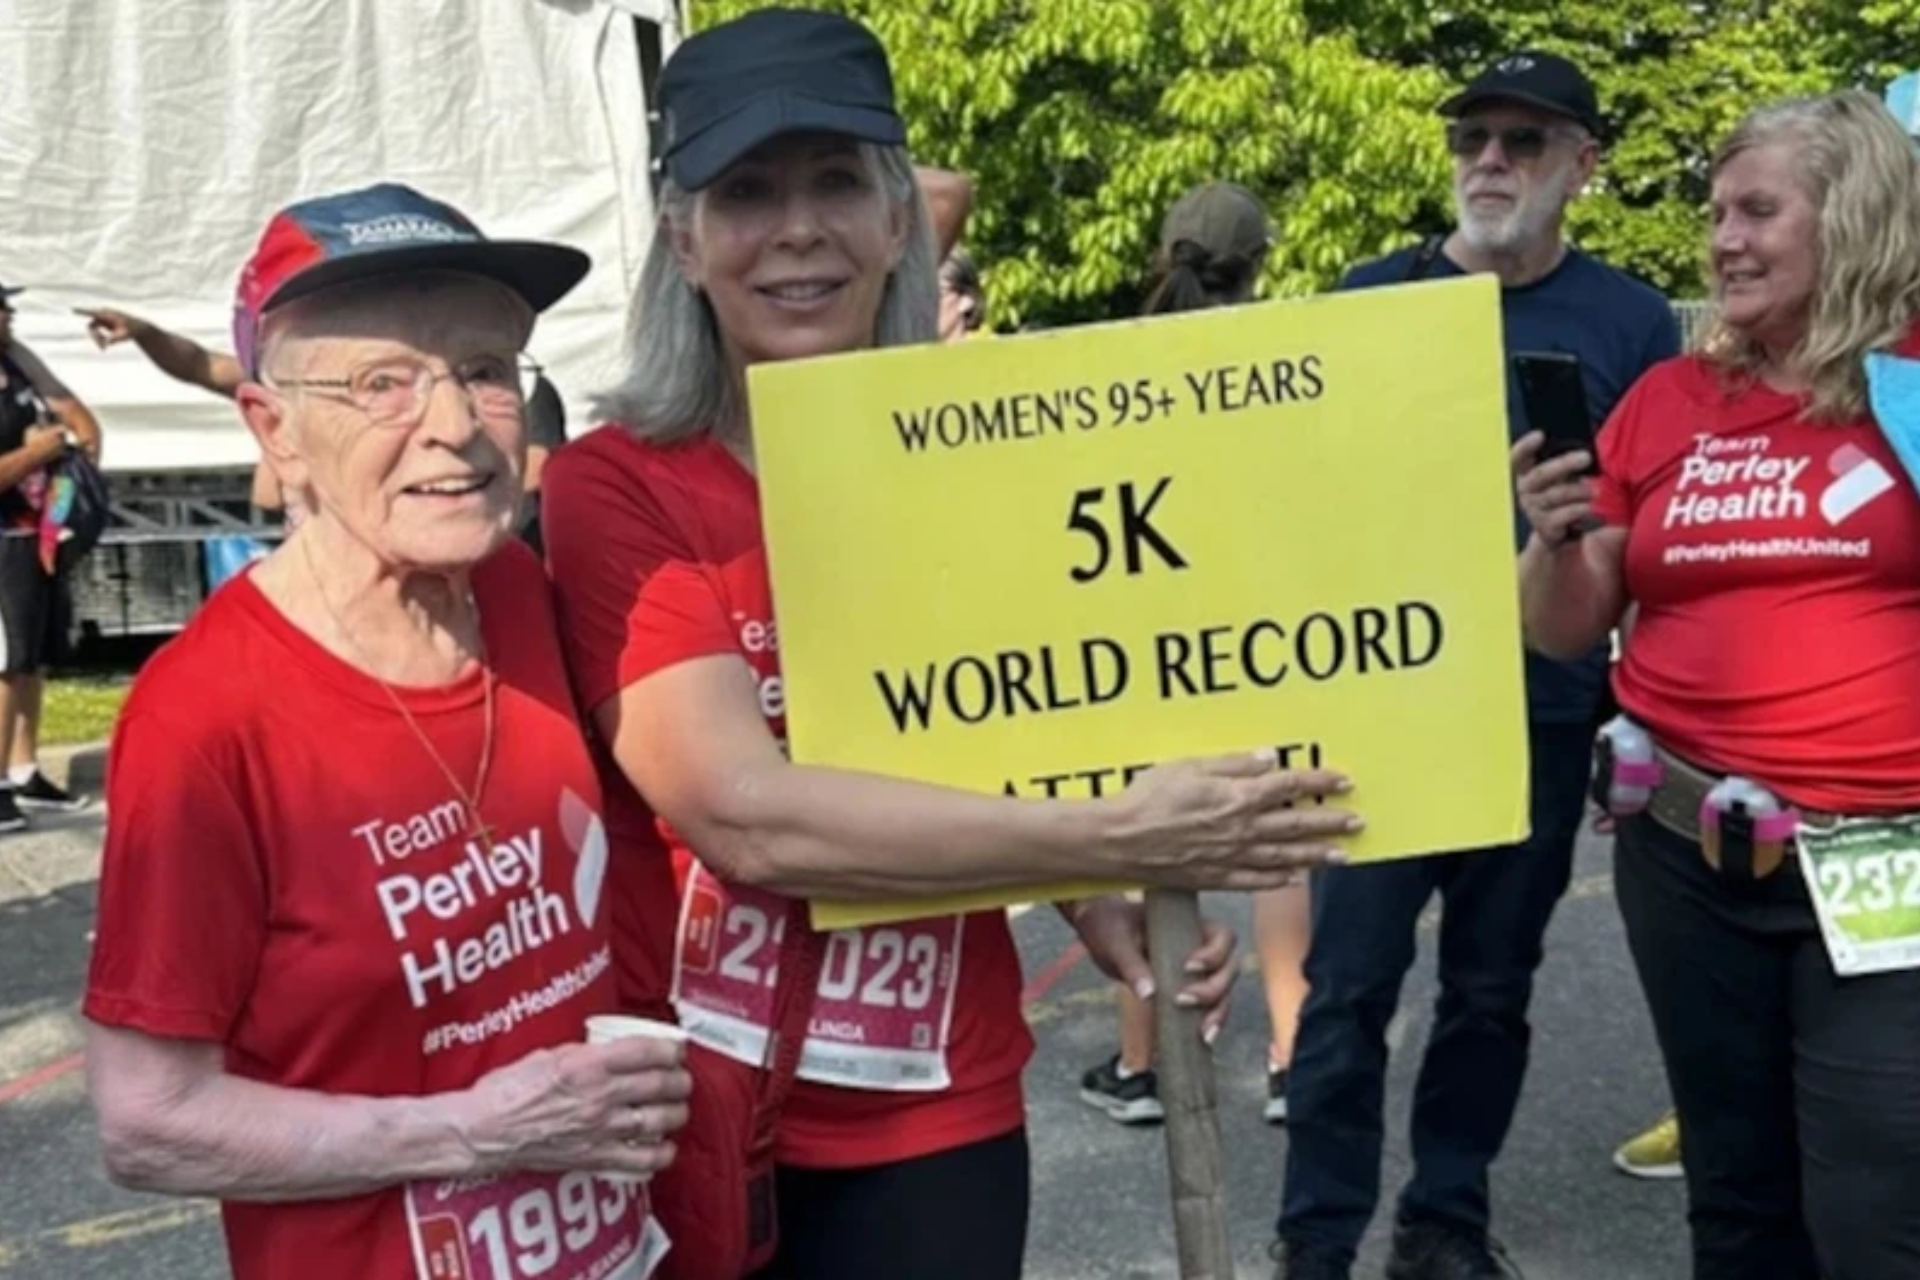 5km world record